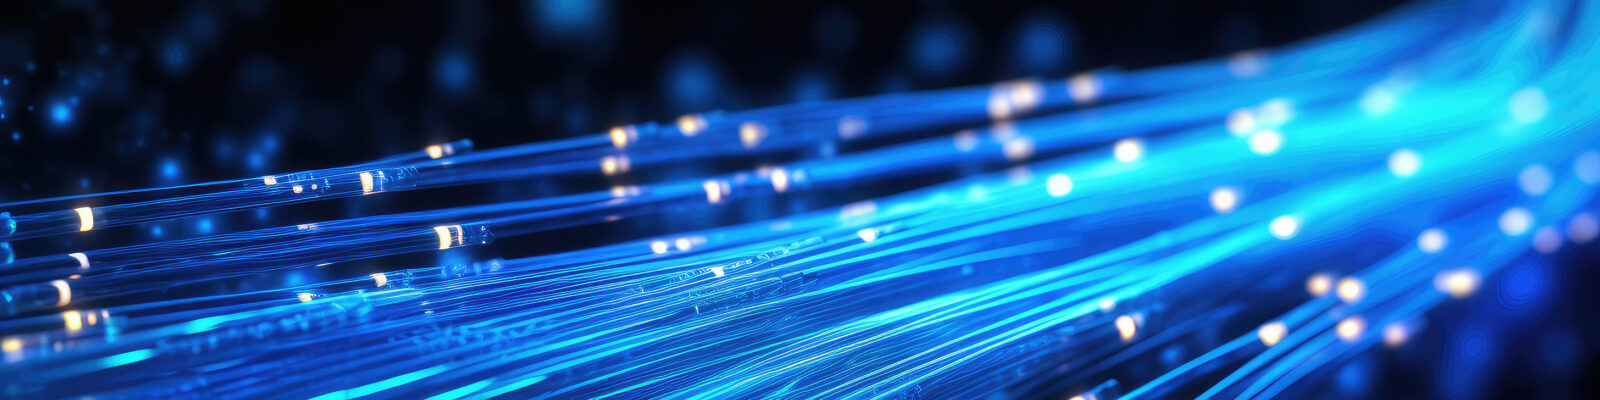 Glowing blue strands of fiber optic cables illustrating digital